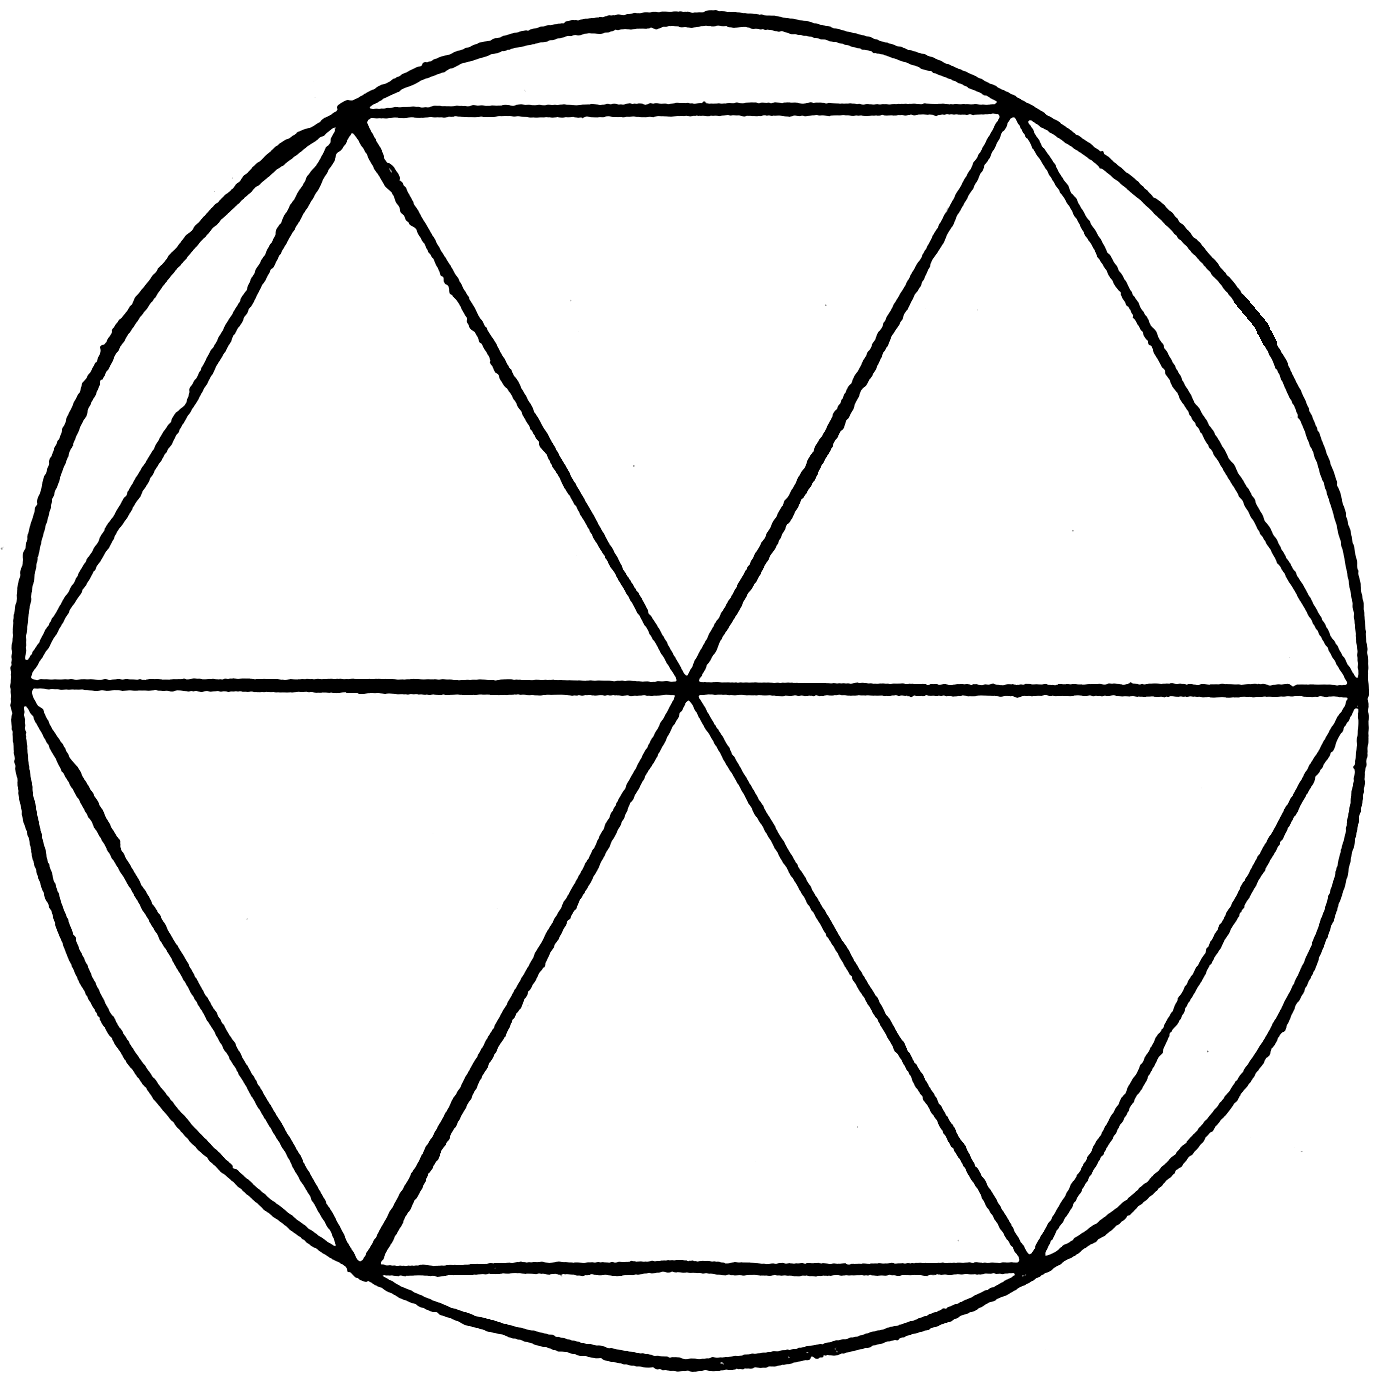 Circle and hexagons